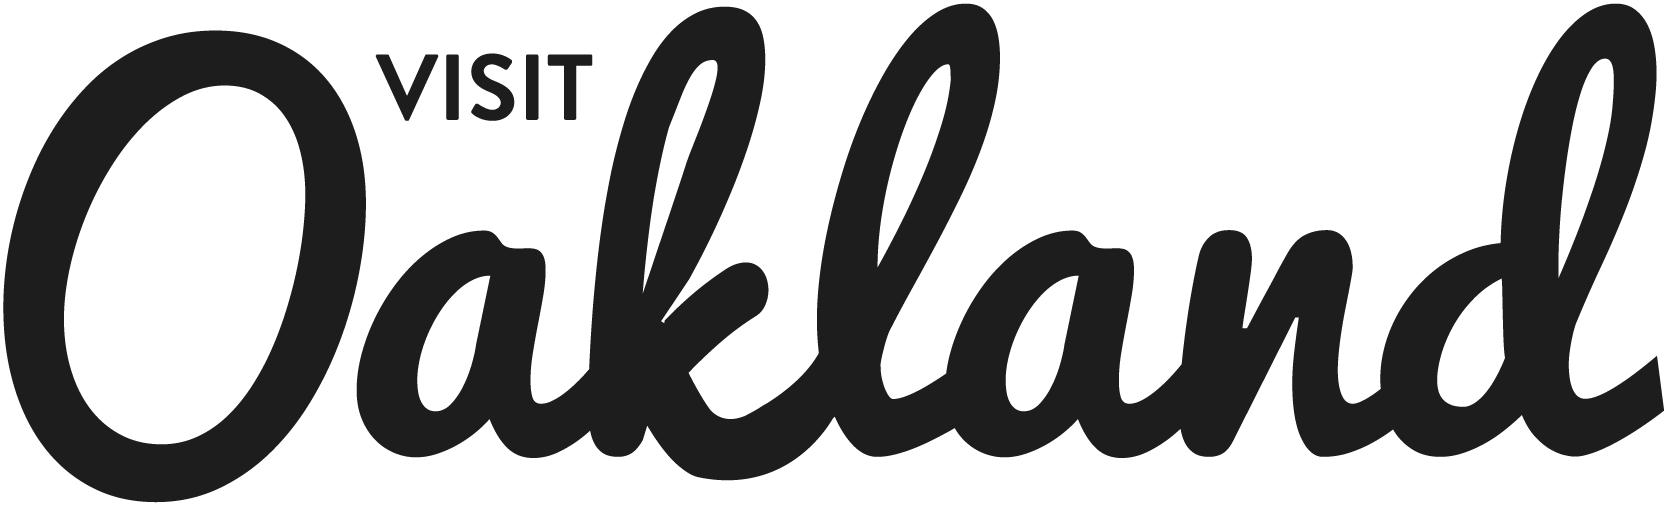 VistOakland-Logo-Words-Only-Black